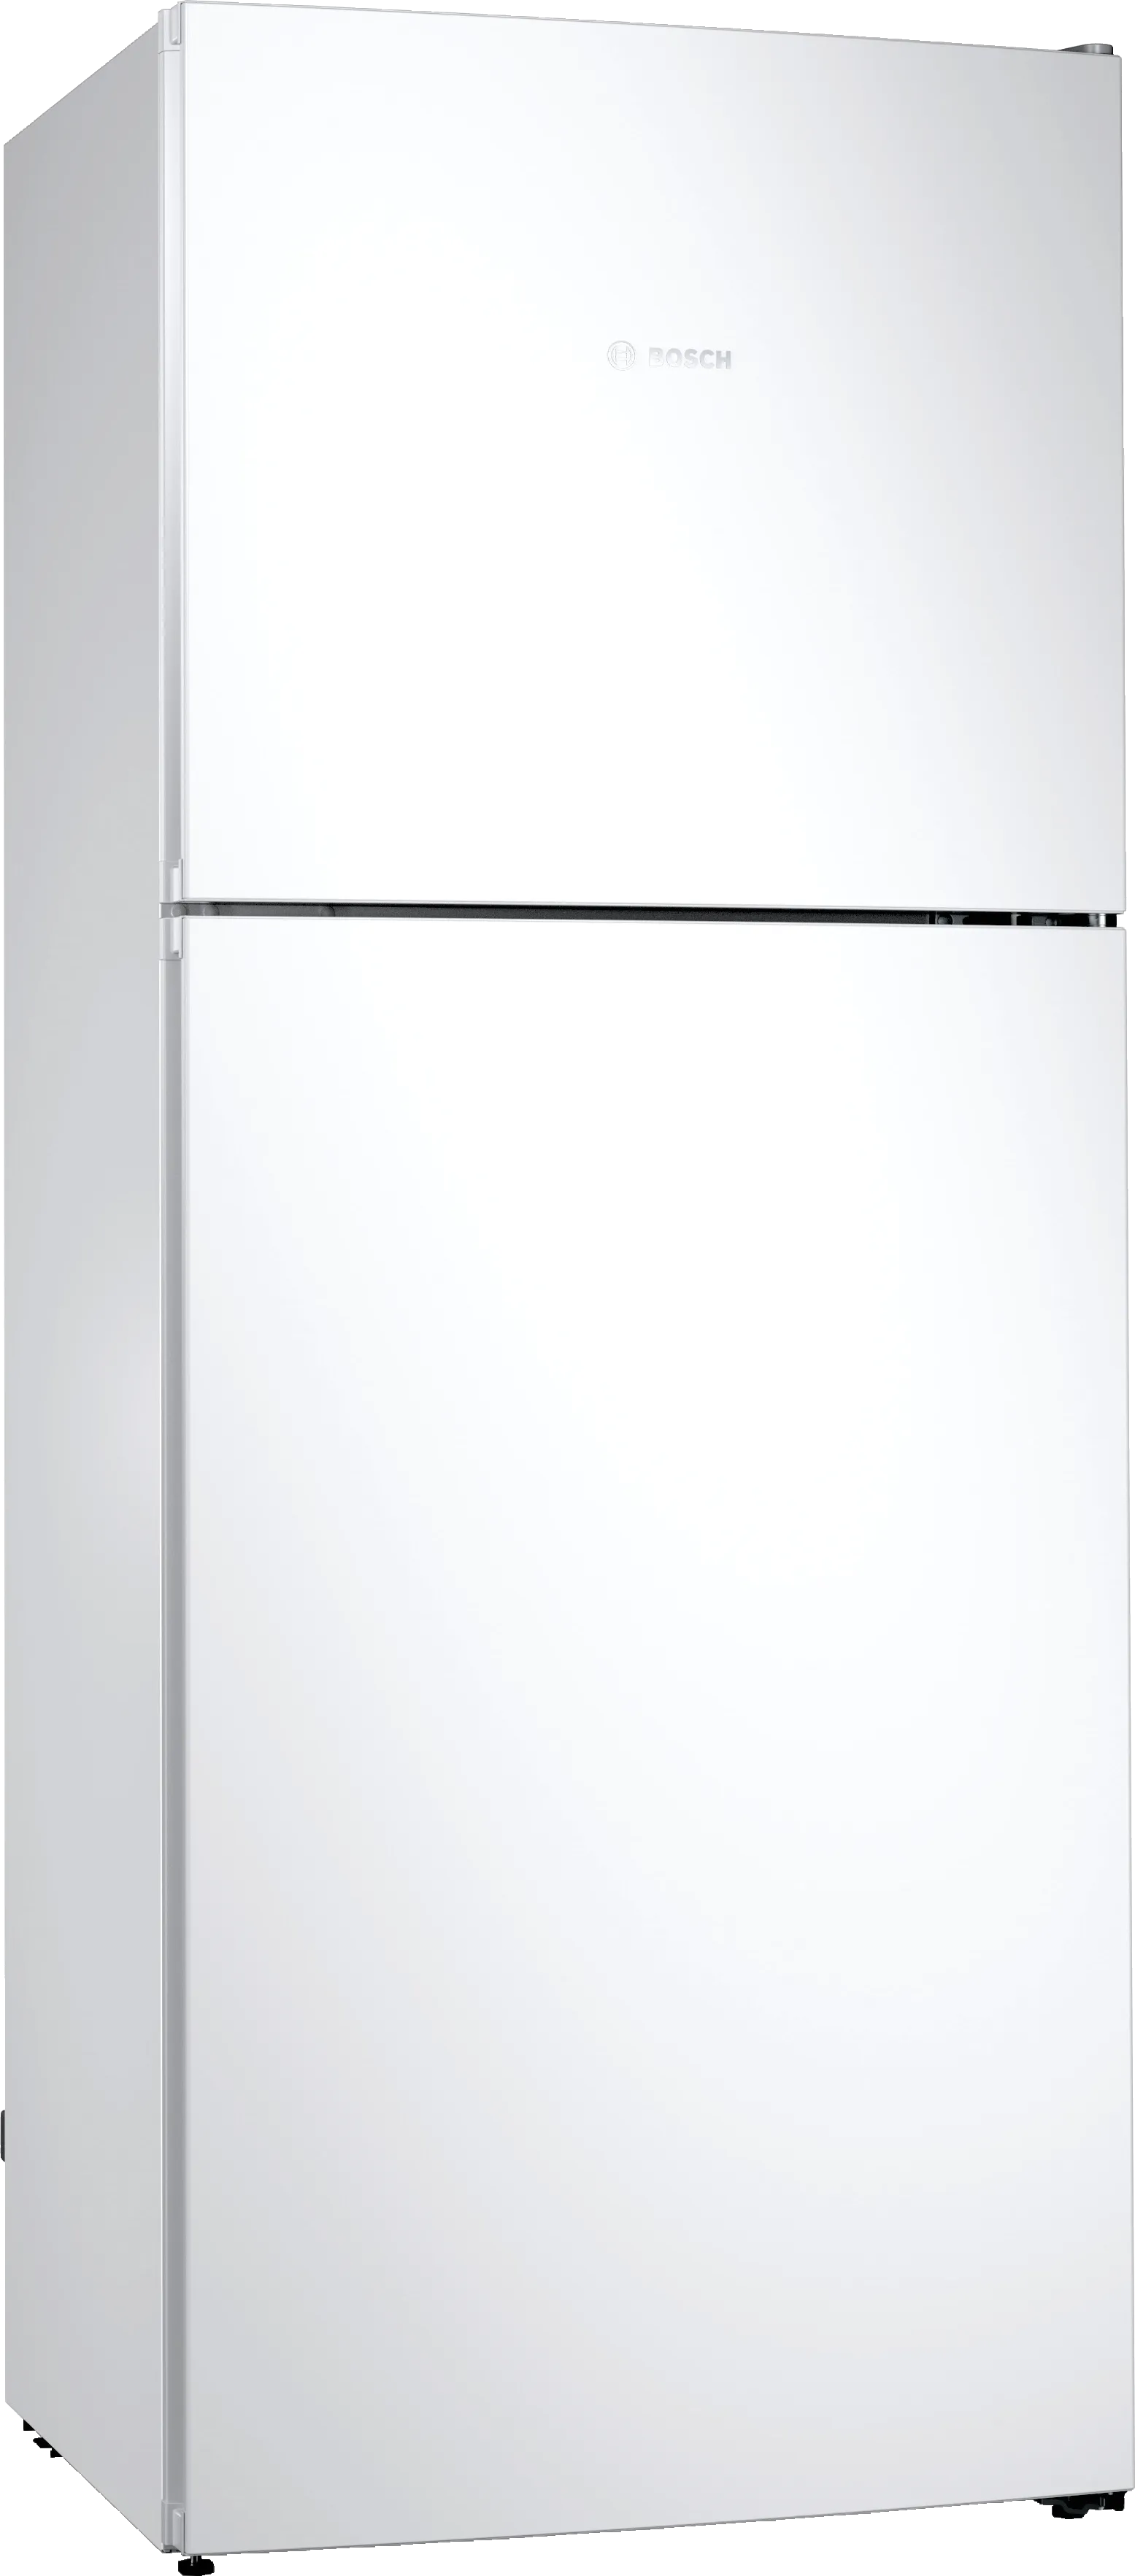 Series 2 free-standing fridge-freezer with freezer at top 178 x 70 cm White 